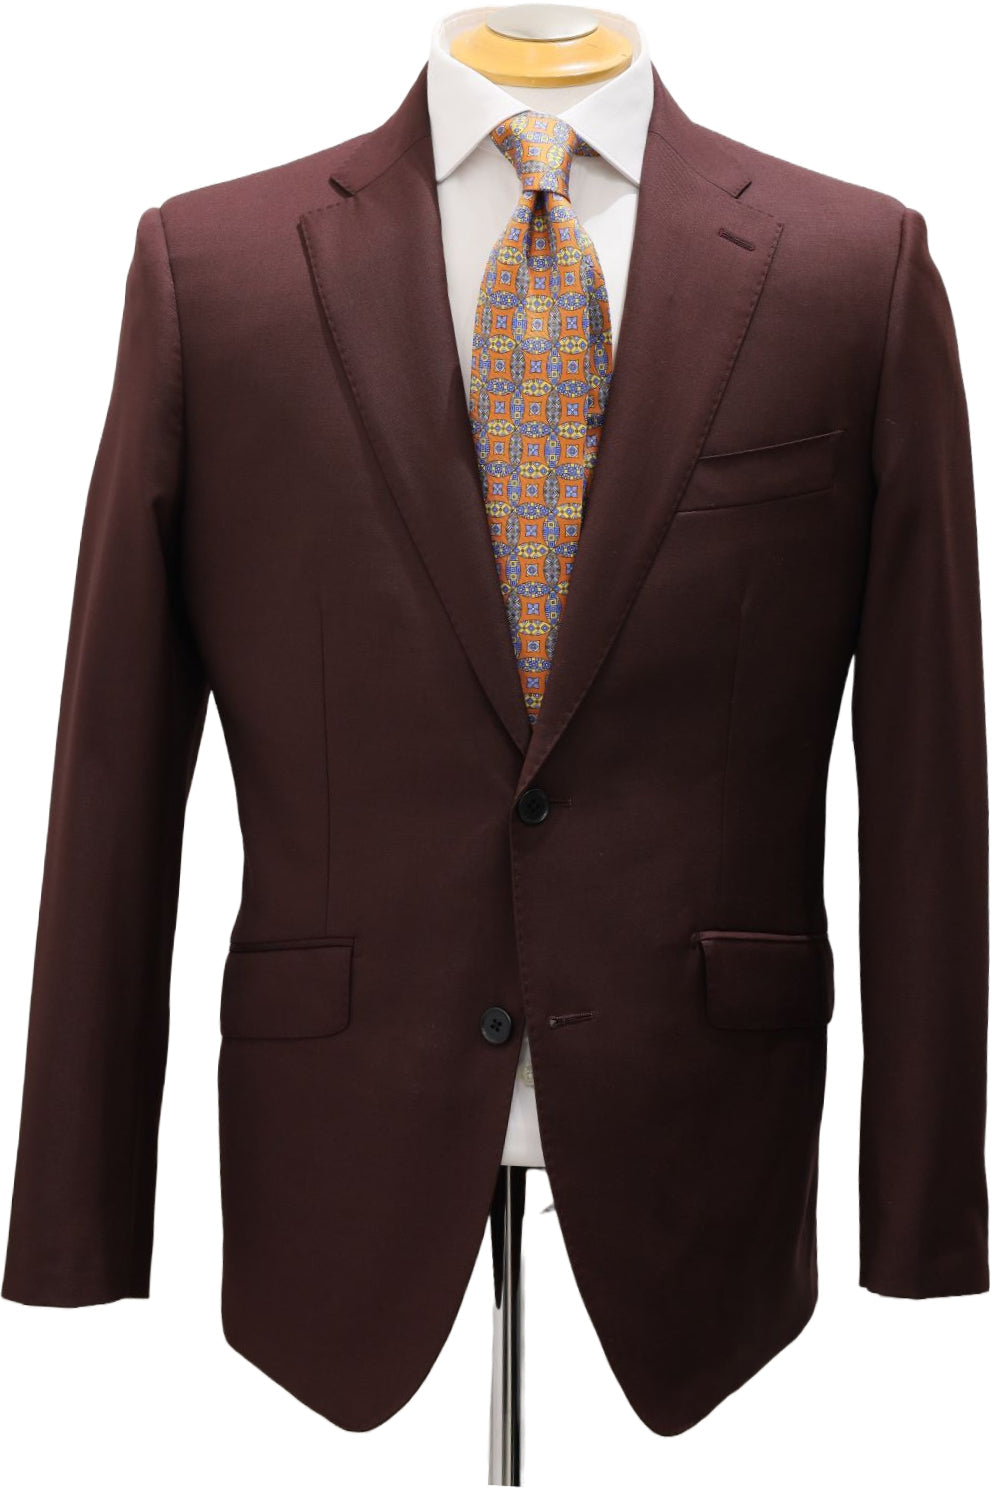 Solid Burgundy Wool Blended Suit